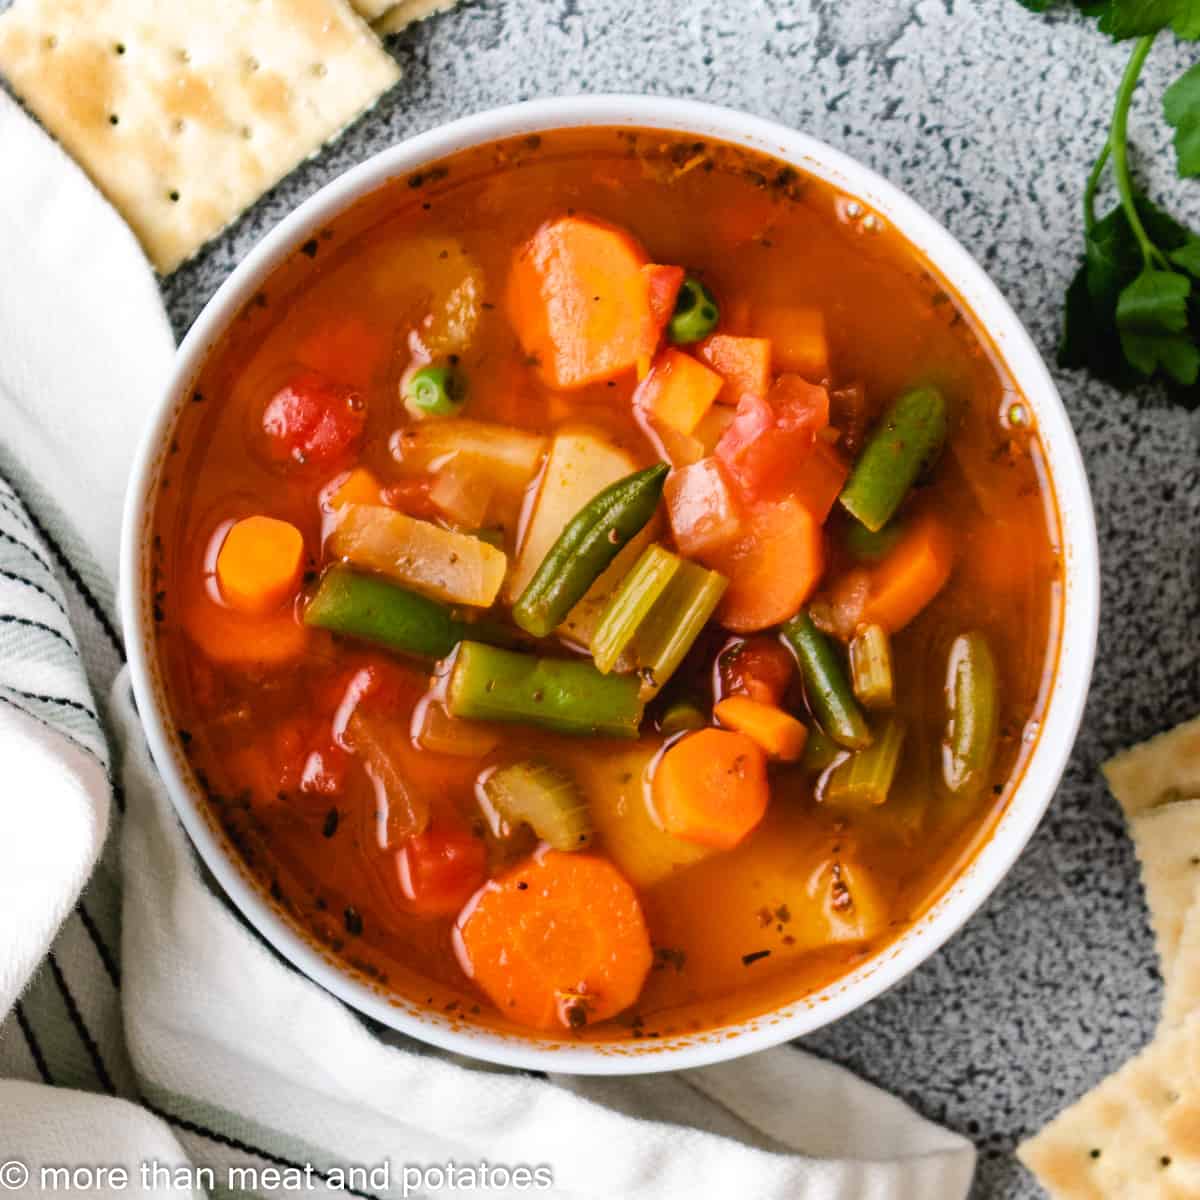 https://morethanmeatandpotatoes.com/wp-content/uploads/2021/02/Homemade-Vegetable-Soup-Featured-Image.jpg